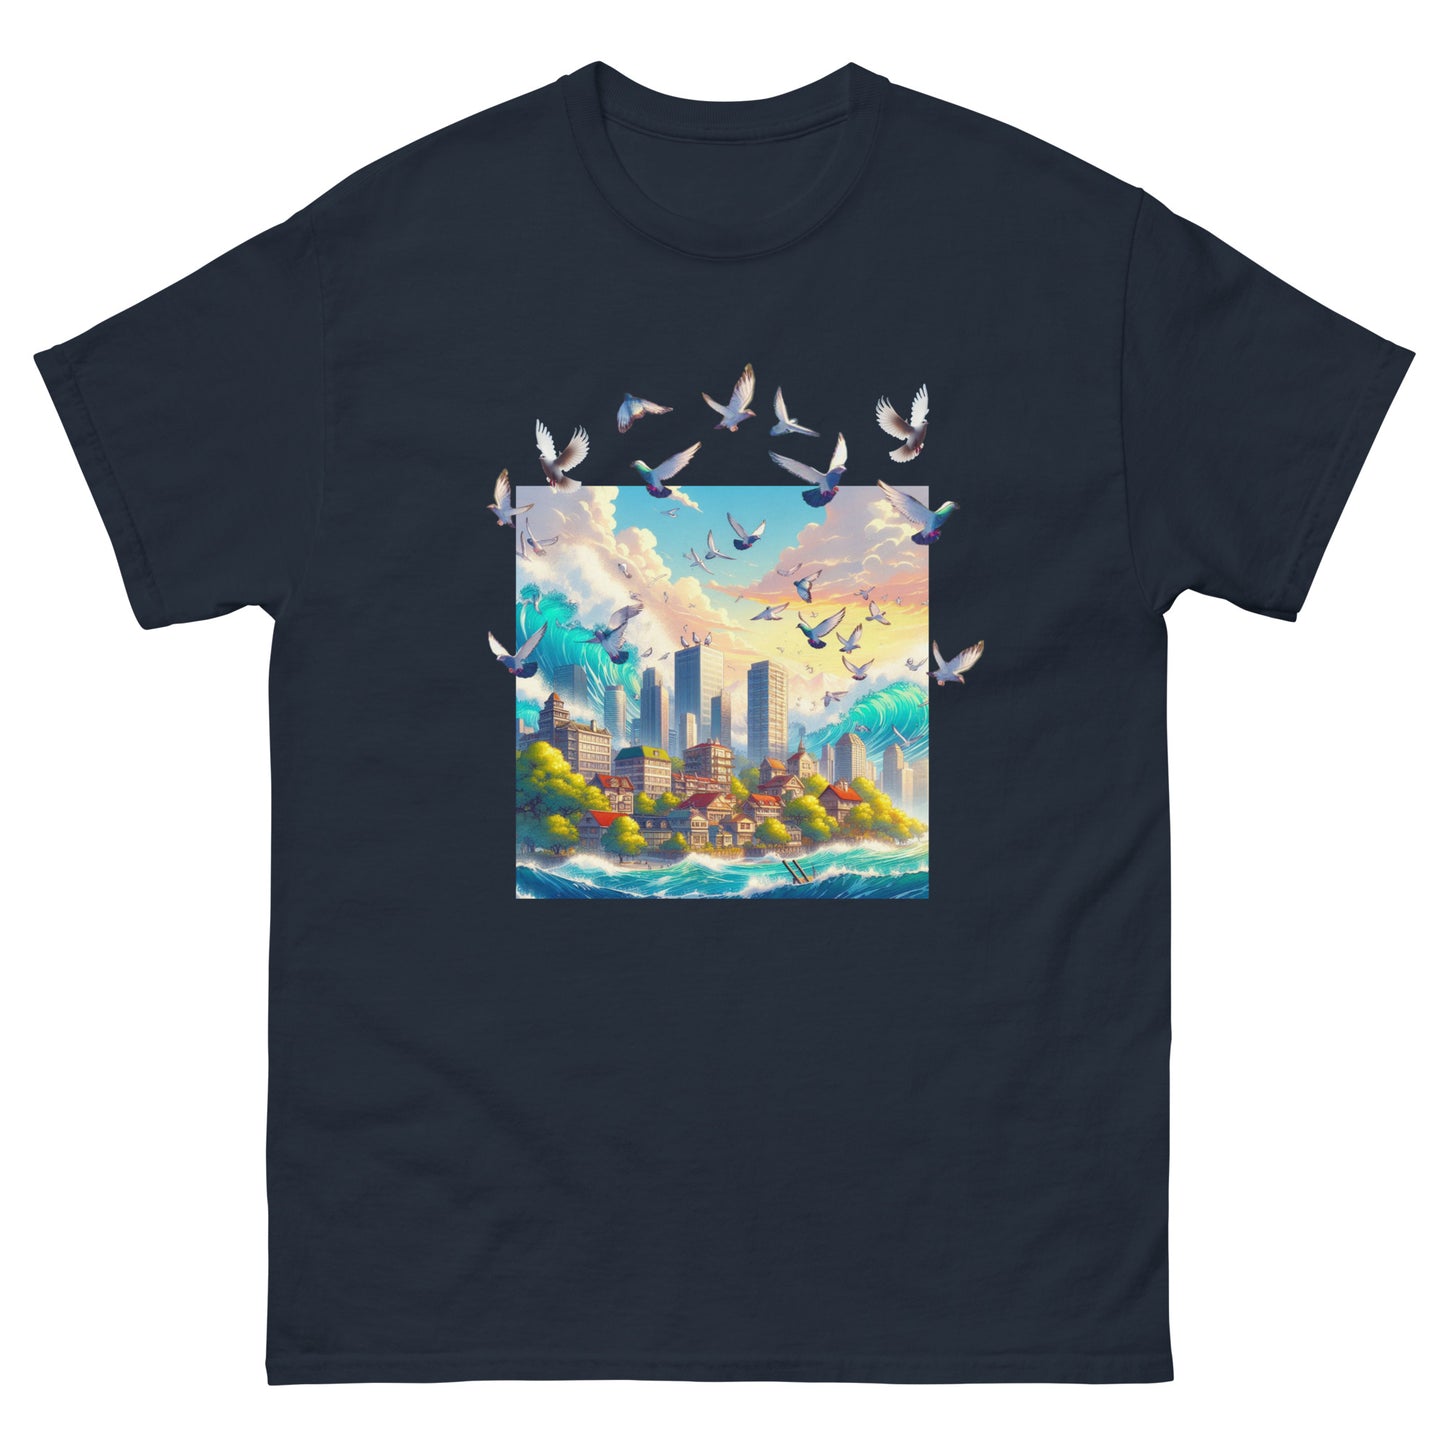 "Birds flying away" T-Shirt